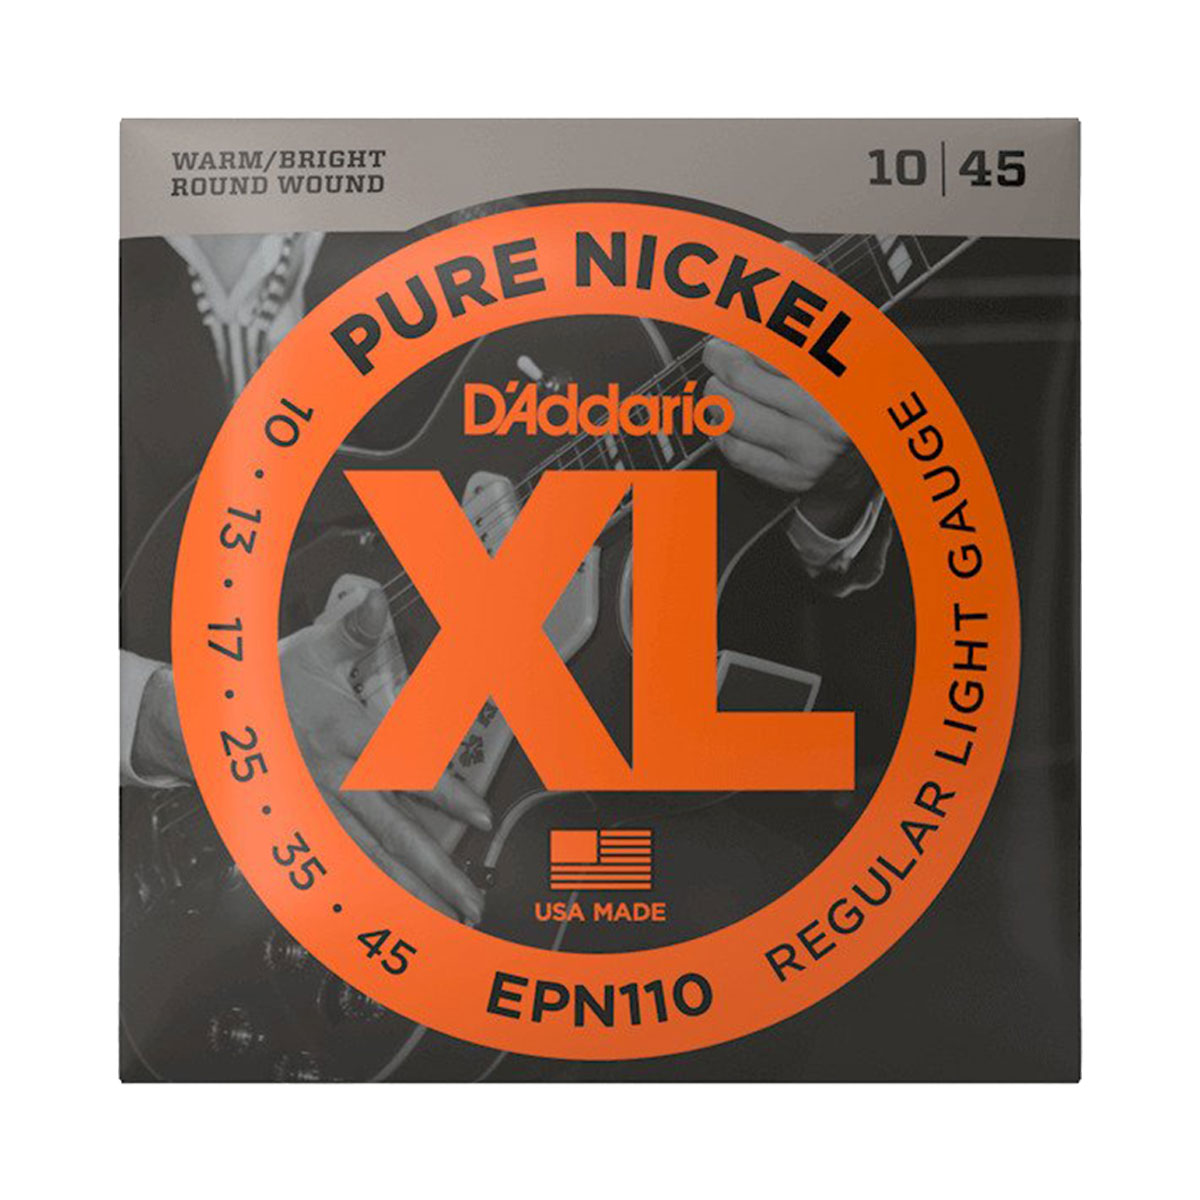 D'Addario EPN110 Pure Nickel Electric Guitar Regular Light Strings<br>EPN110